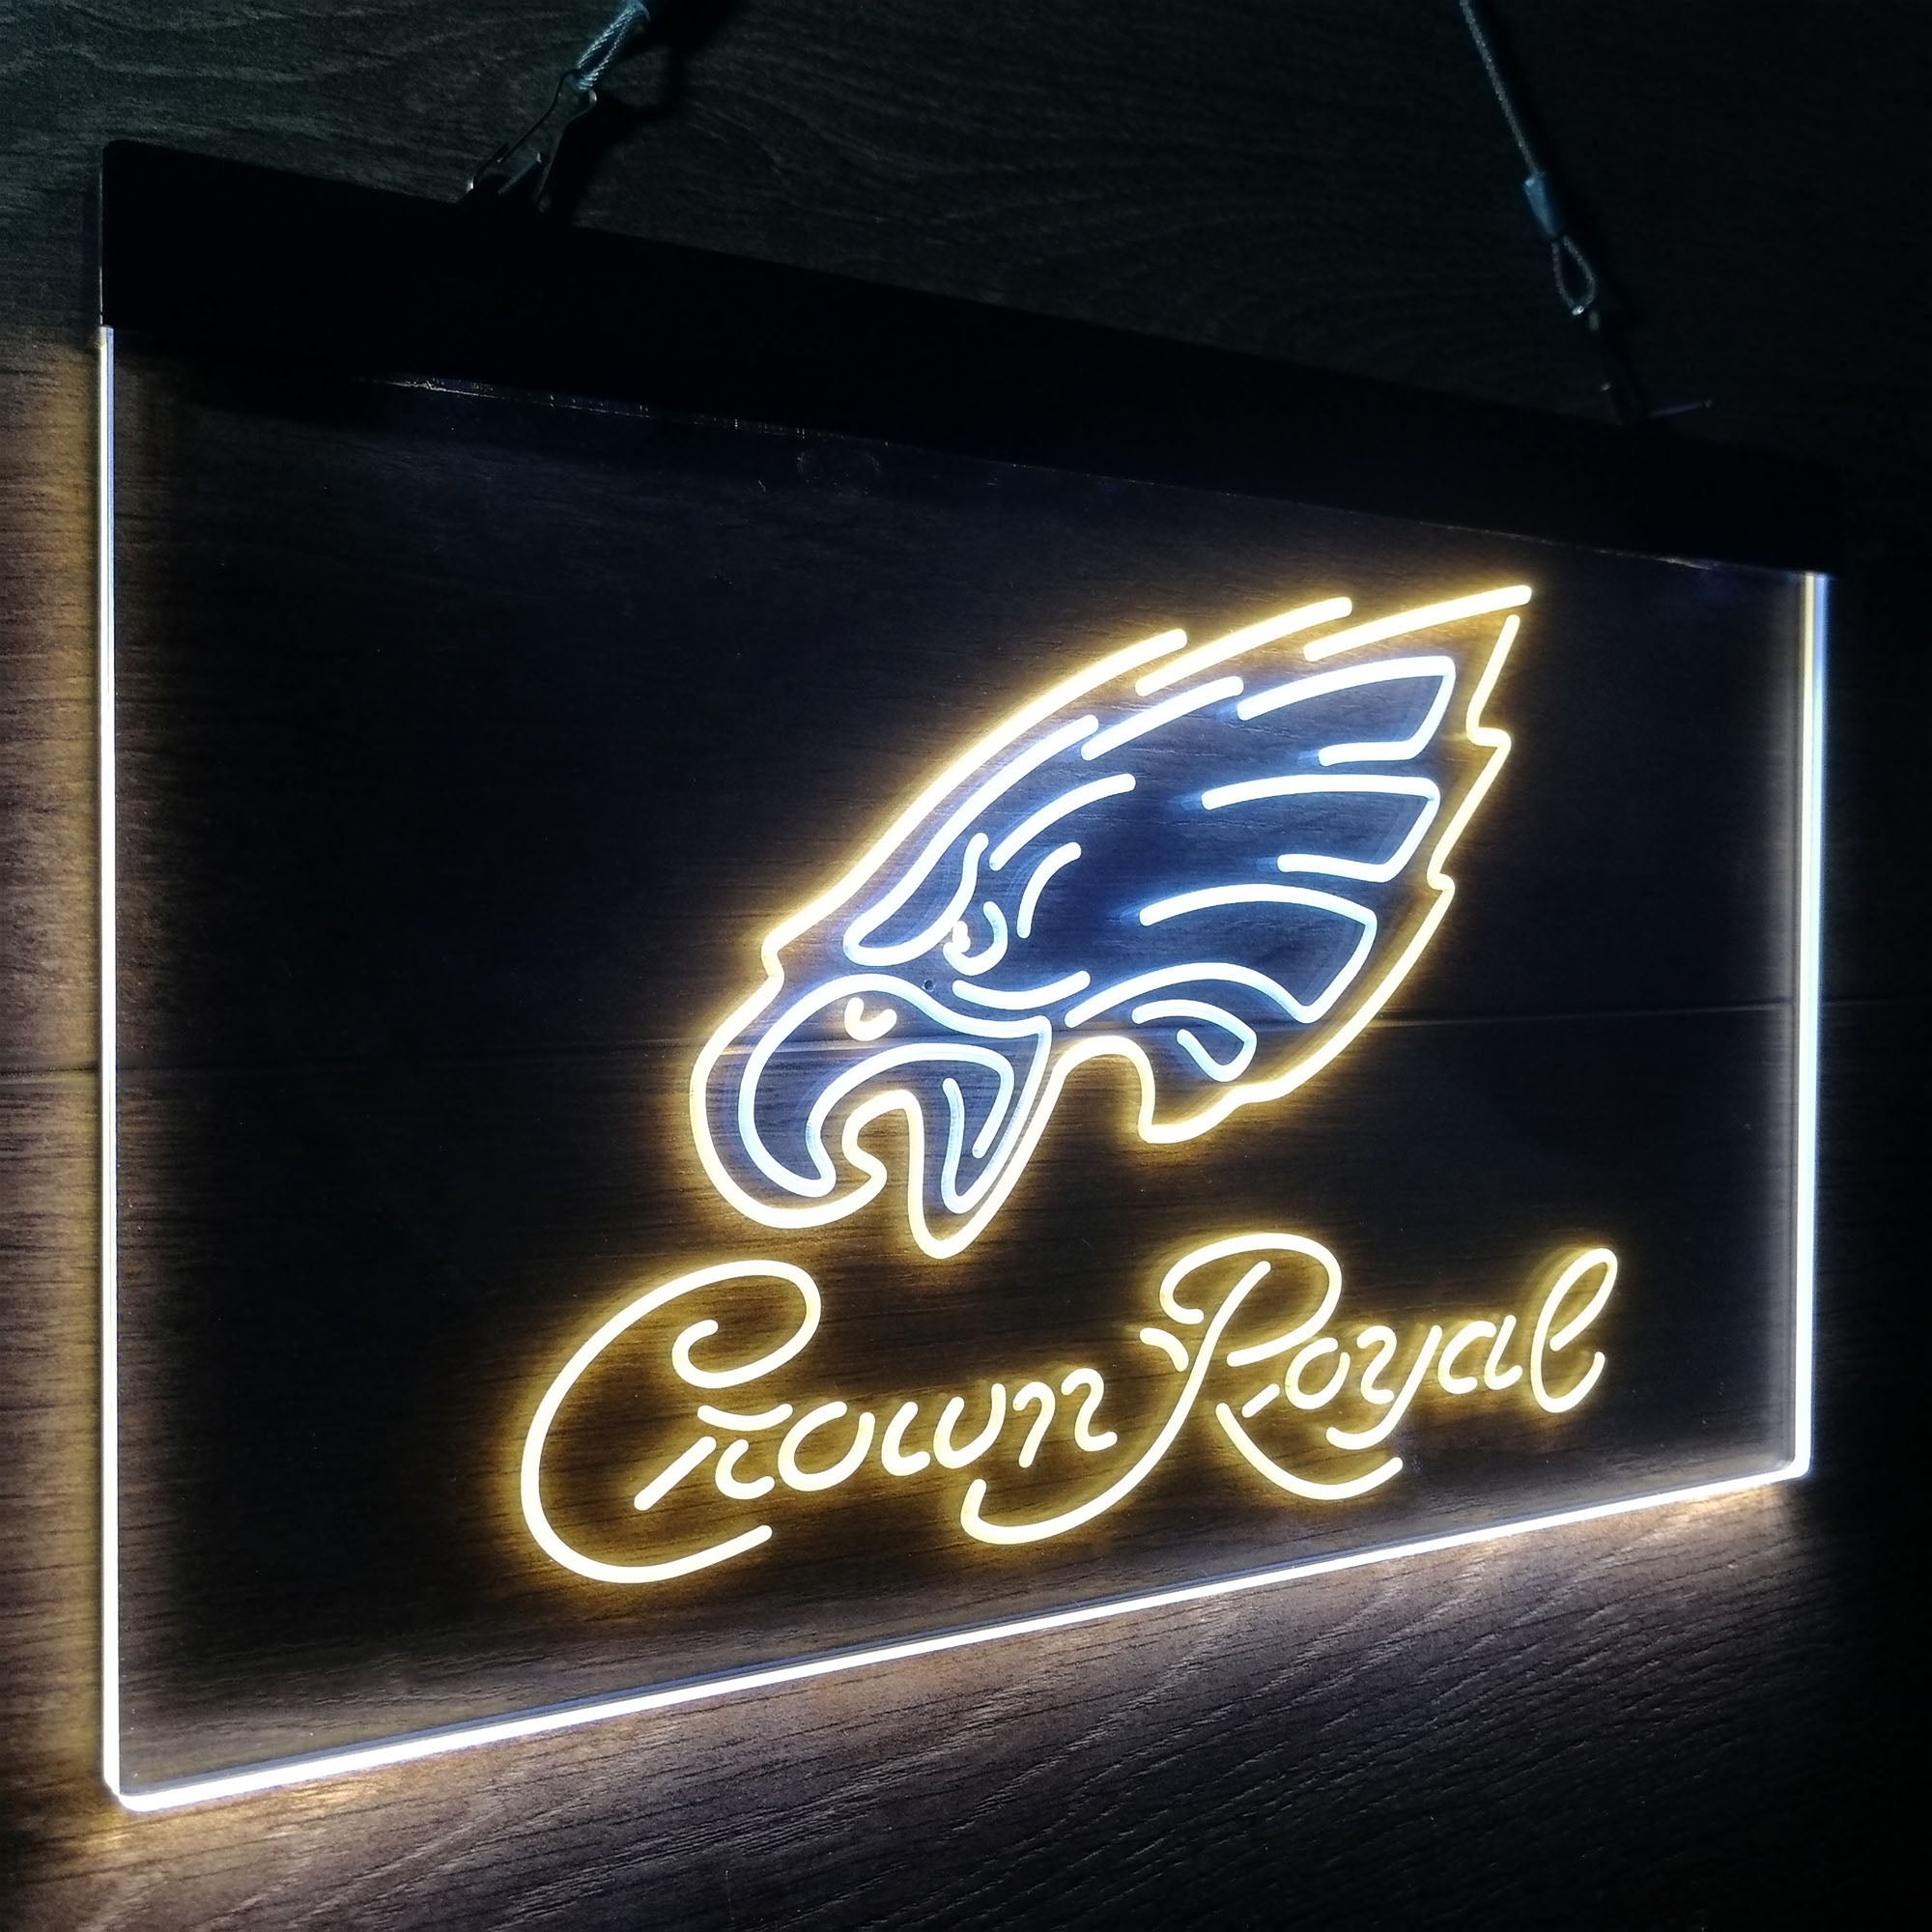 Philadelphia Eagles Crown Royal NeonLike LED Sign Home Bar Gift